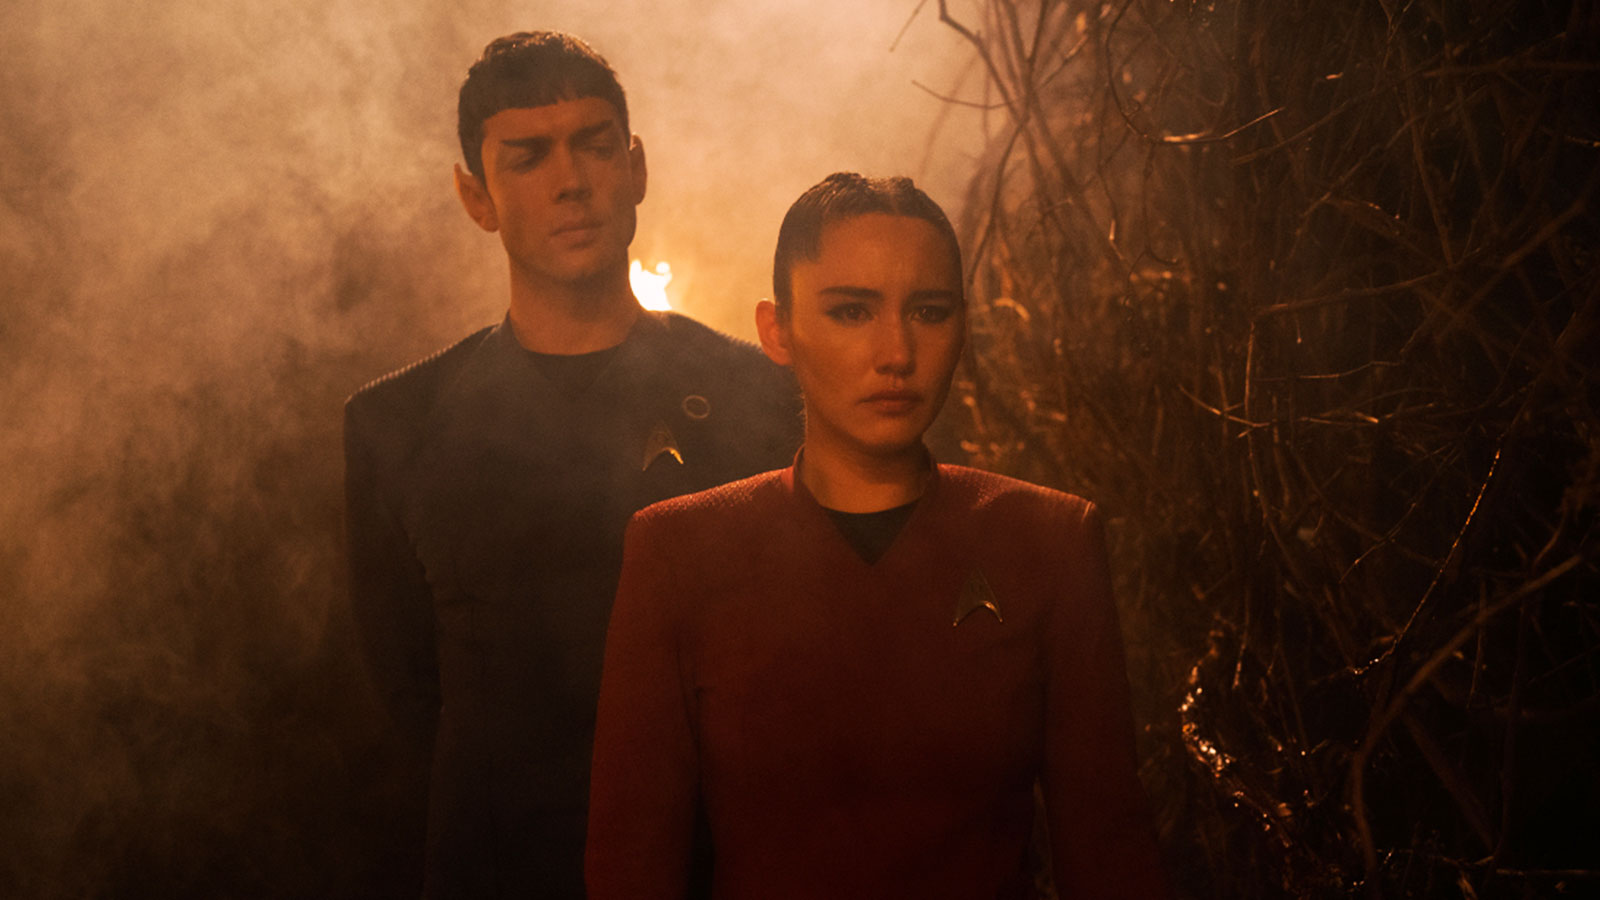 Star Trek: Strange New Worlds Season 1 Episode 4 “Memento Mori” Review: Where’s the bamboo cannon when you need it?